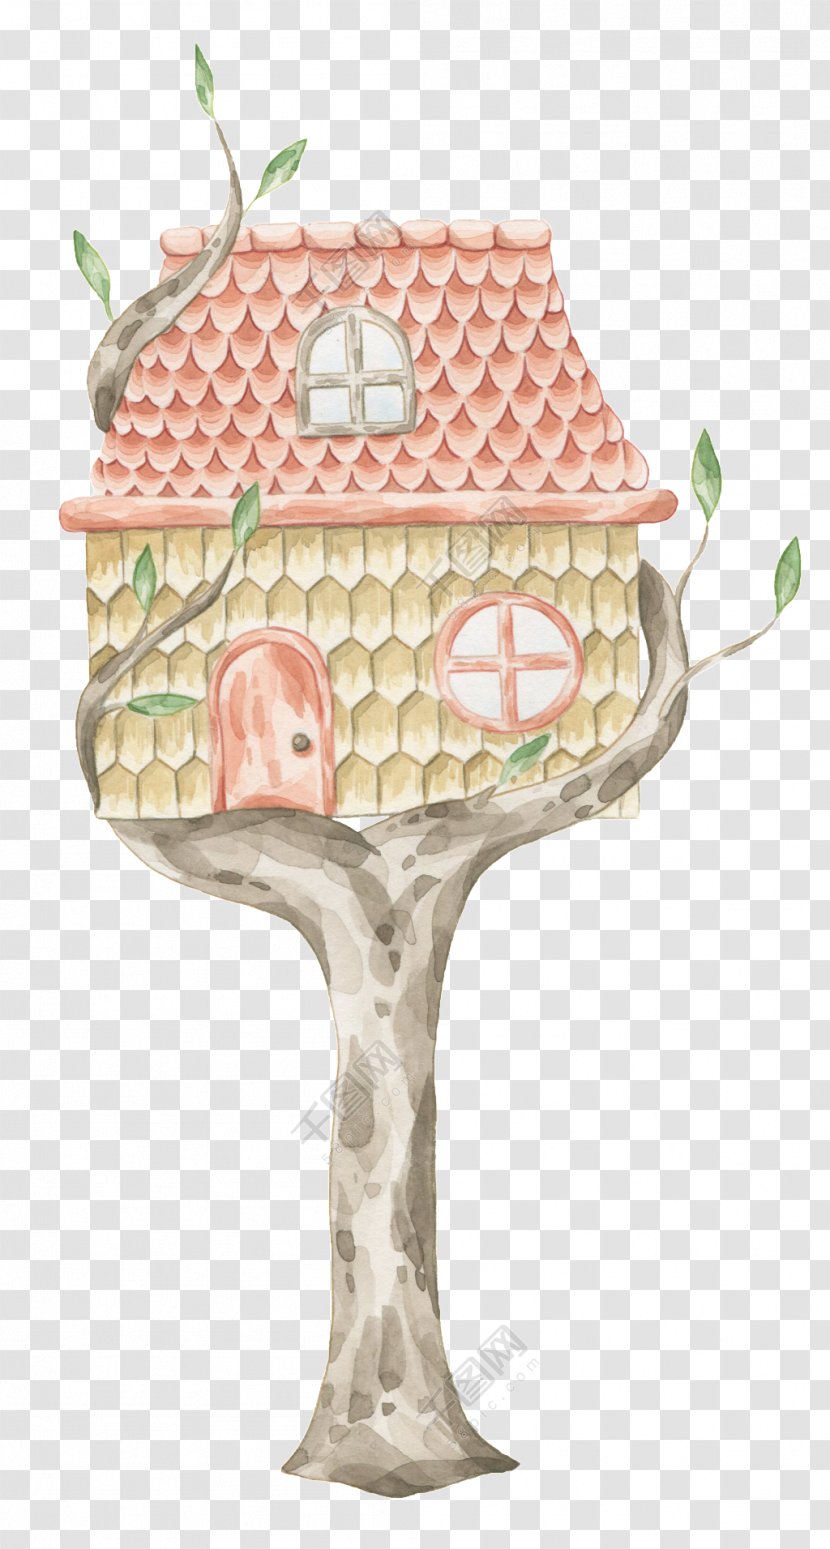 Tree House Image Illustration - Flowerpot - Treehouse Transparent PNG